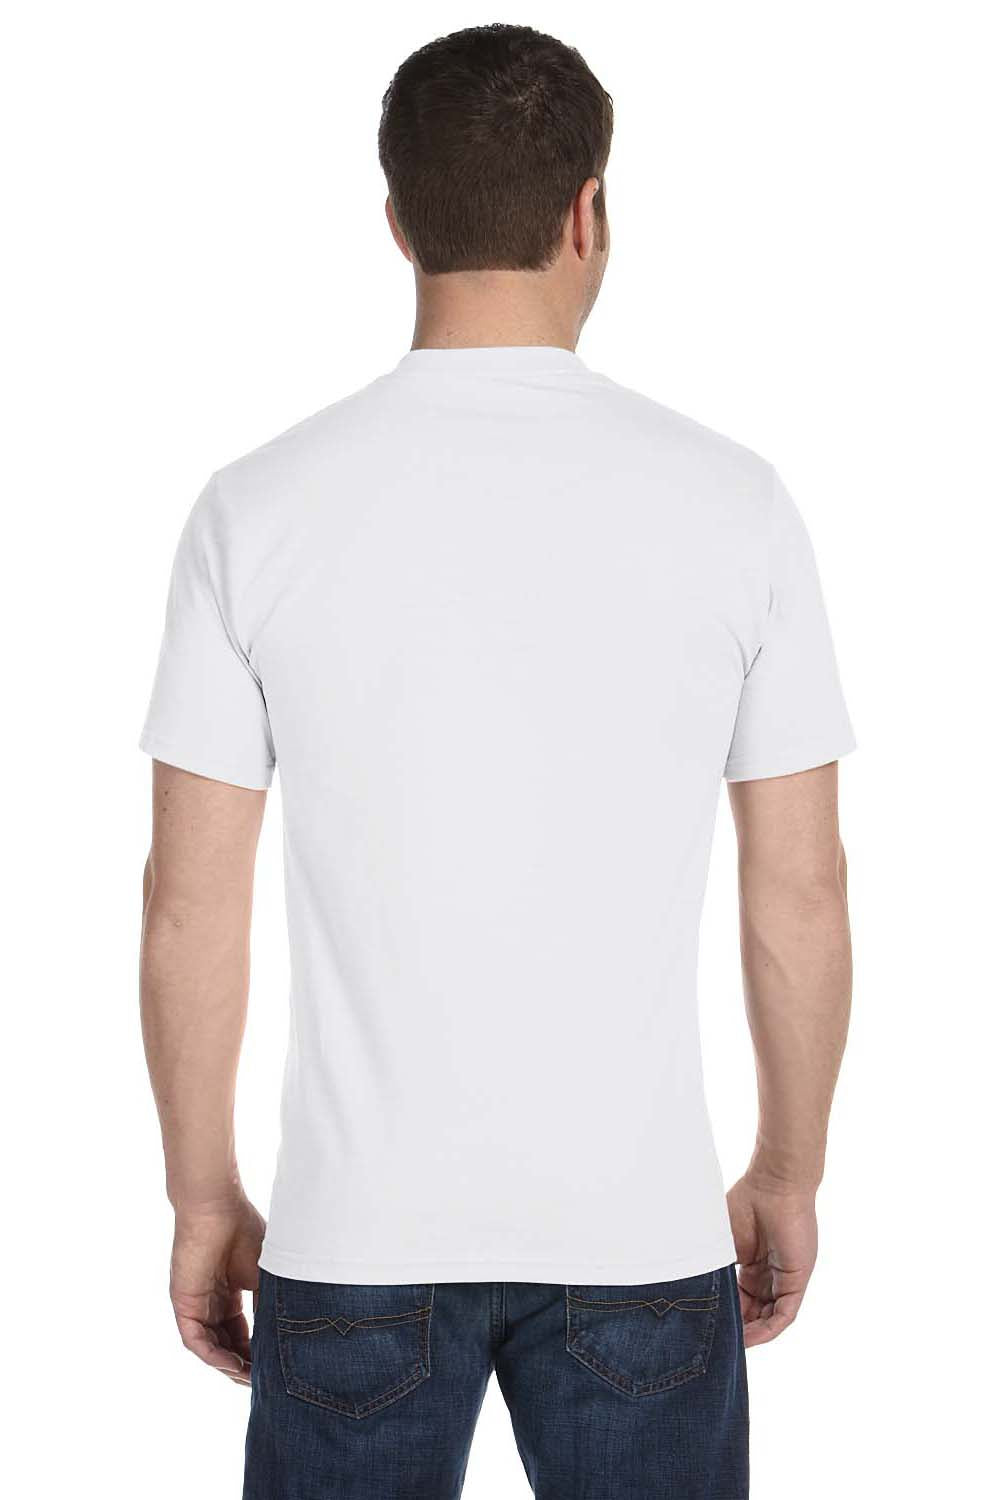 Hanes 5280 Mens ComfortSoft Short Sleeve Crewneck T-Shirt White Back